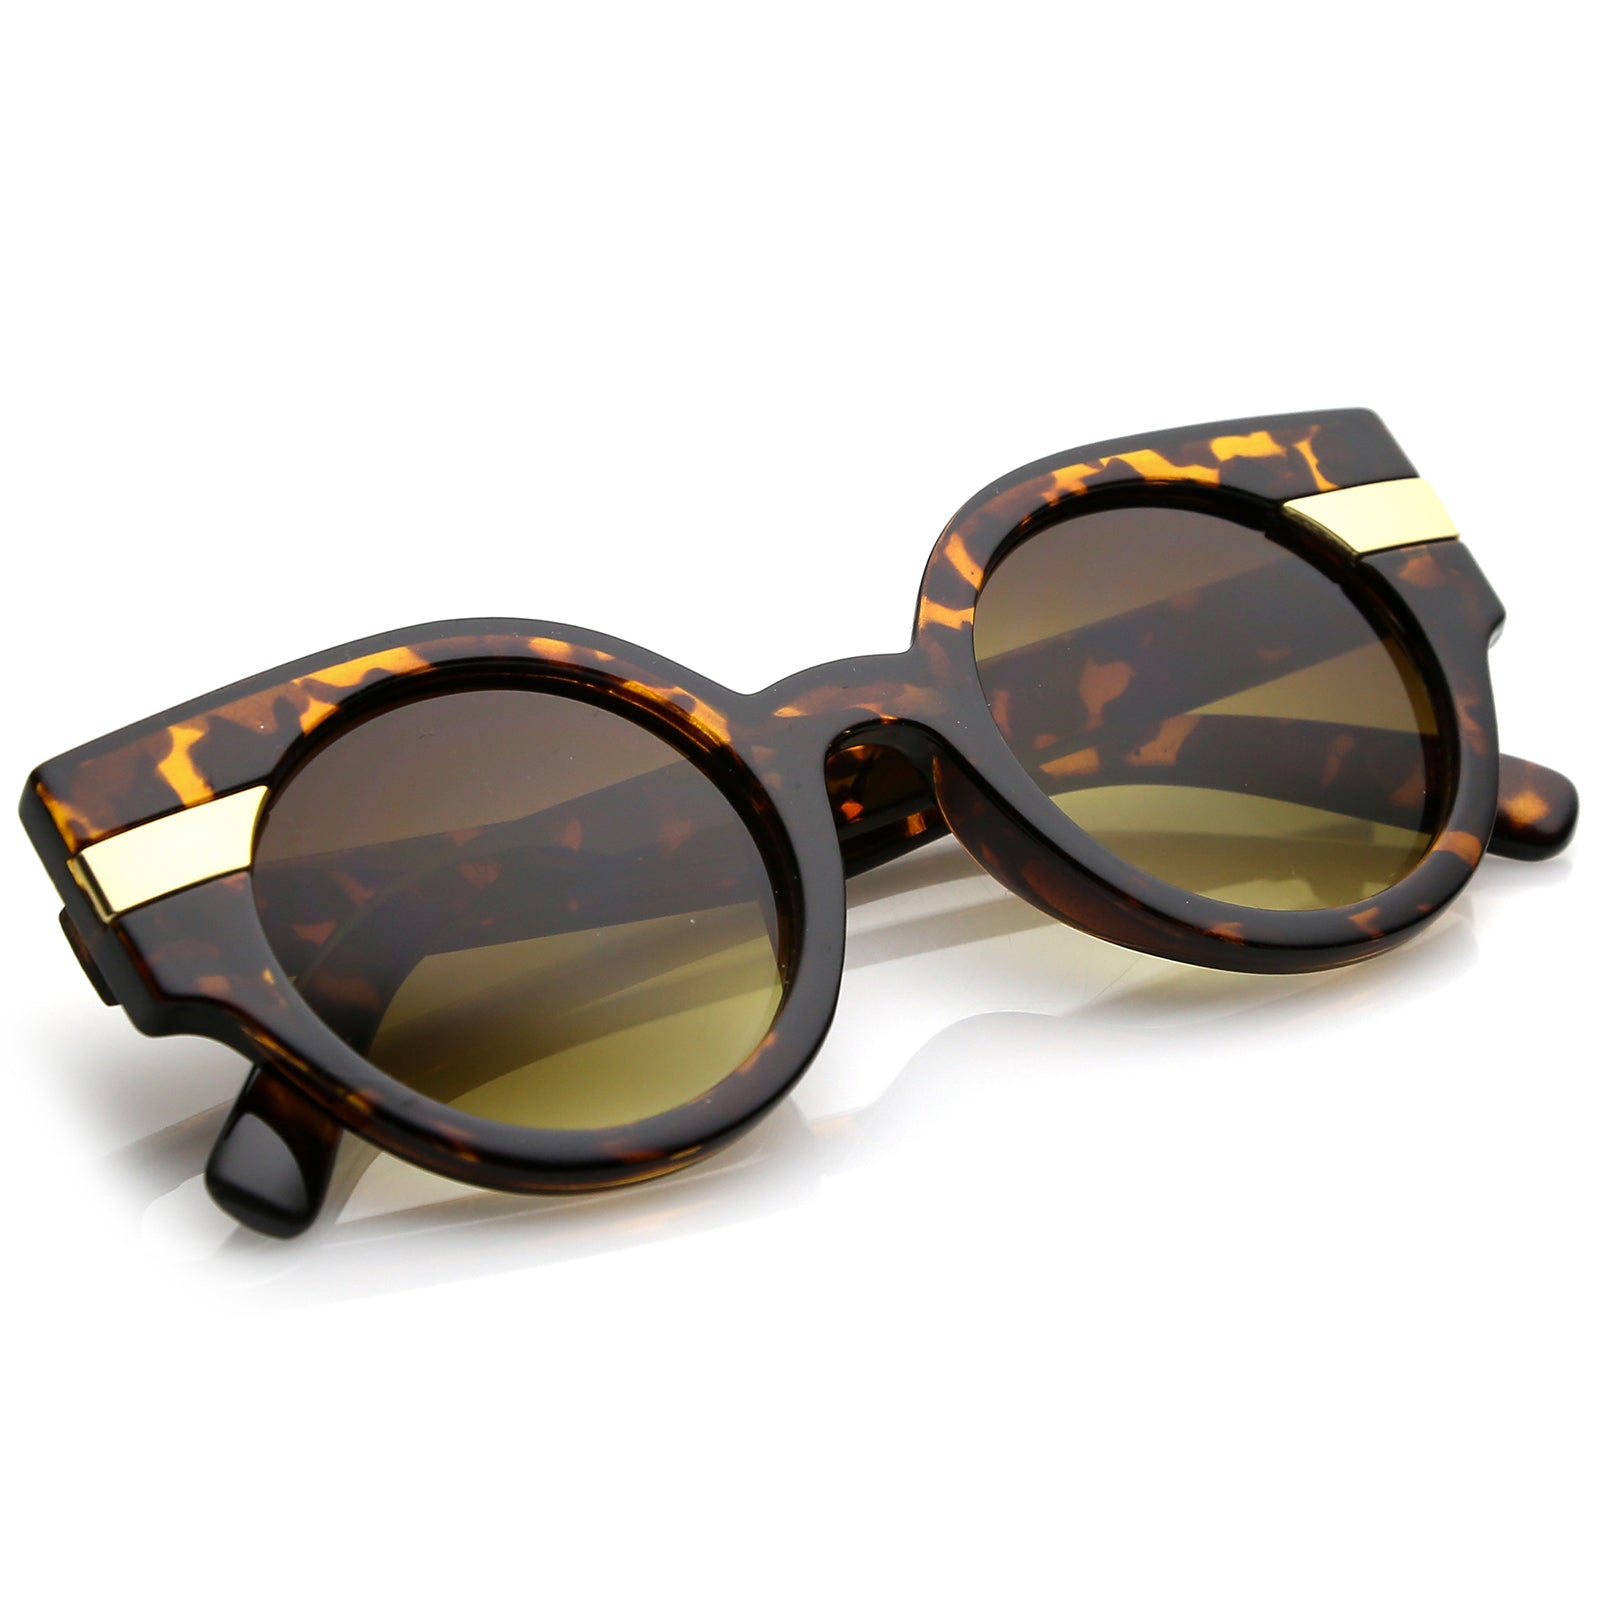 Retro Modern Pastel Round Wing Tip Sunglasses - zeroUV